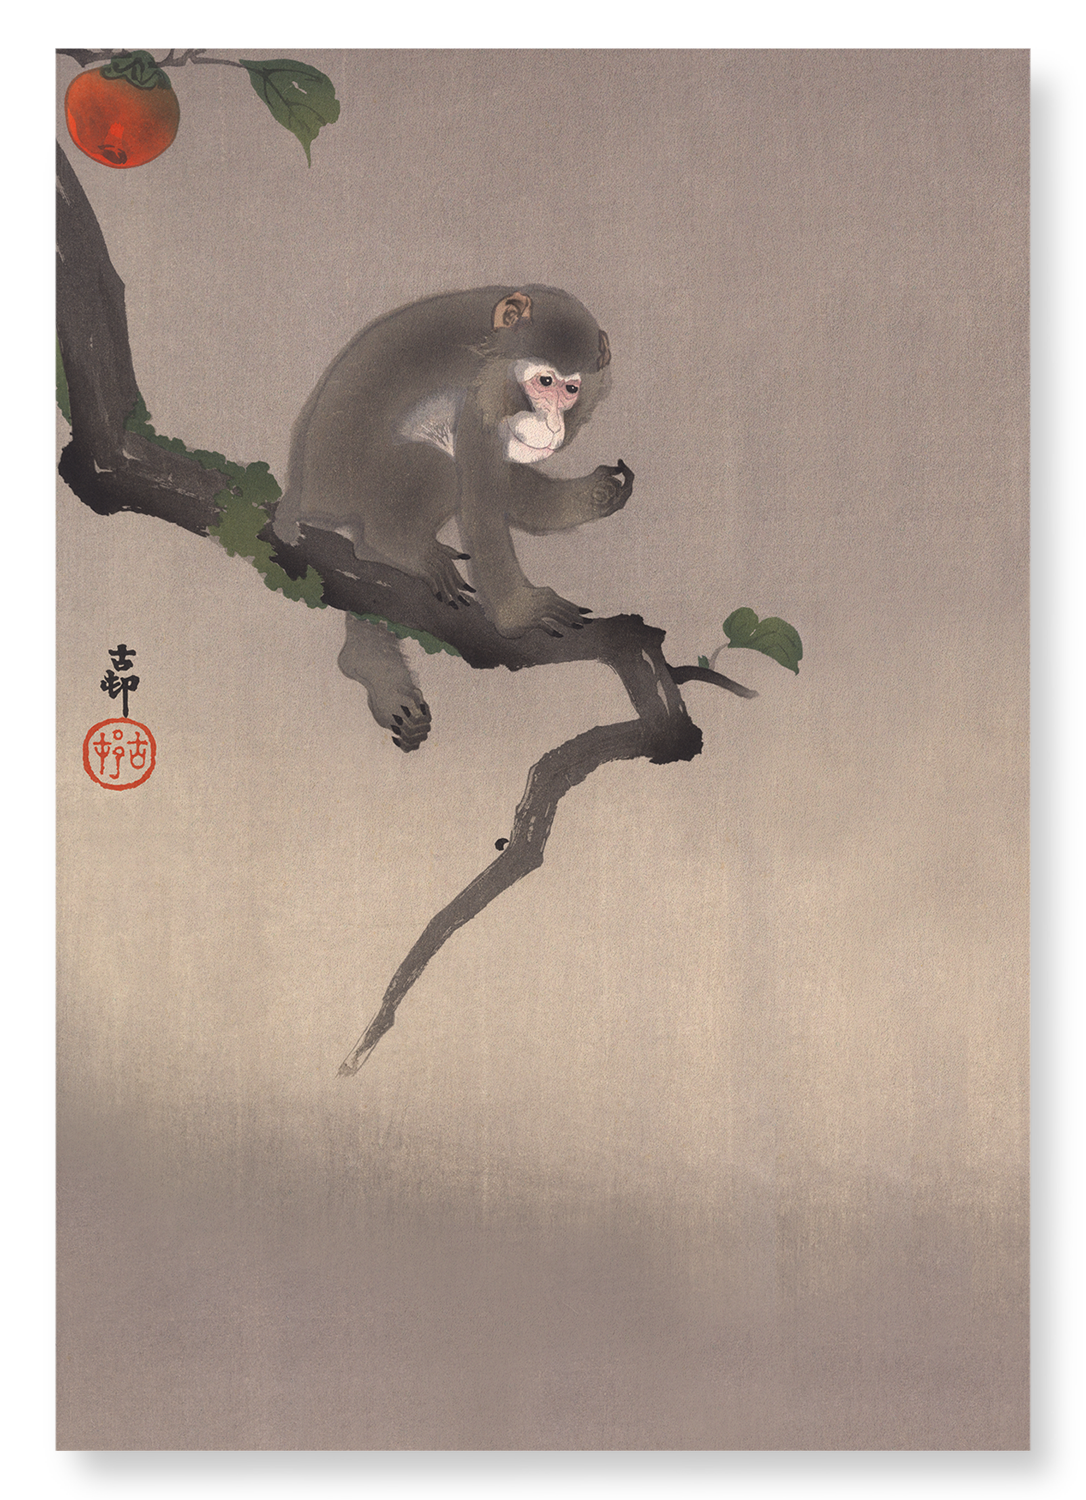 MONKEY AND PERSIMMON FRUIT: Japanese Art Print